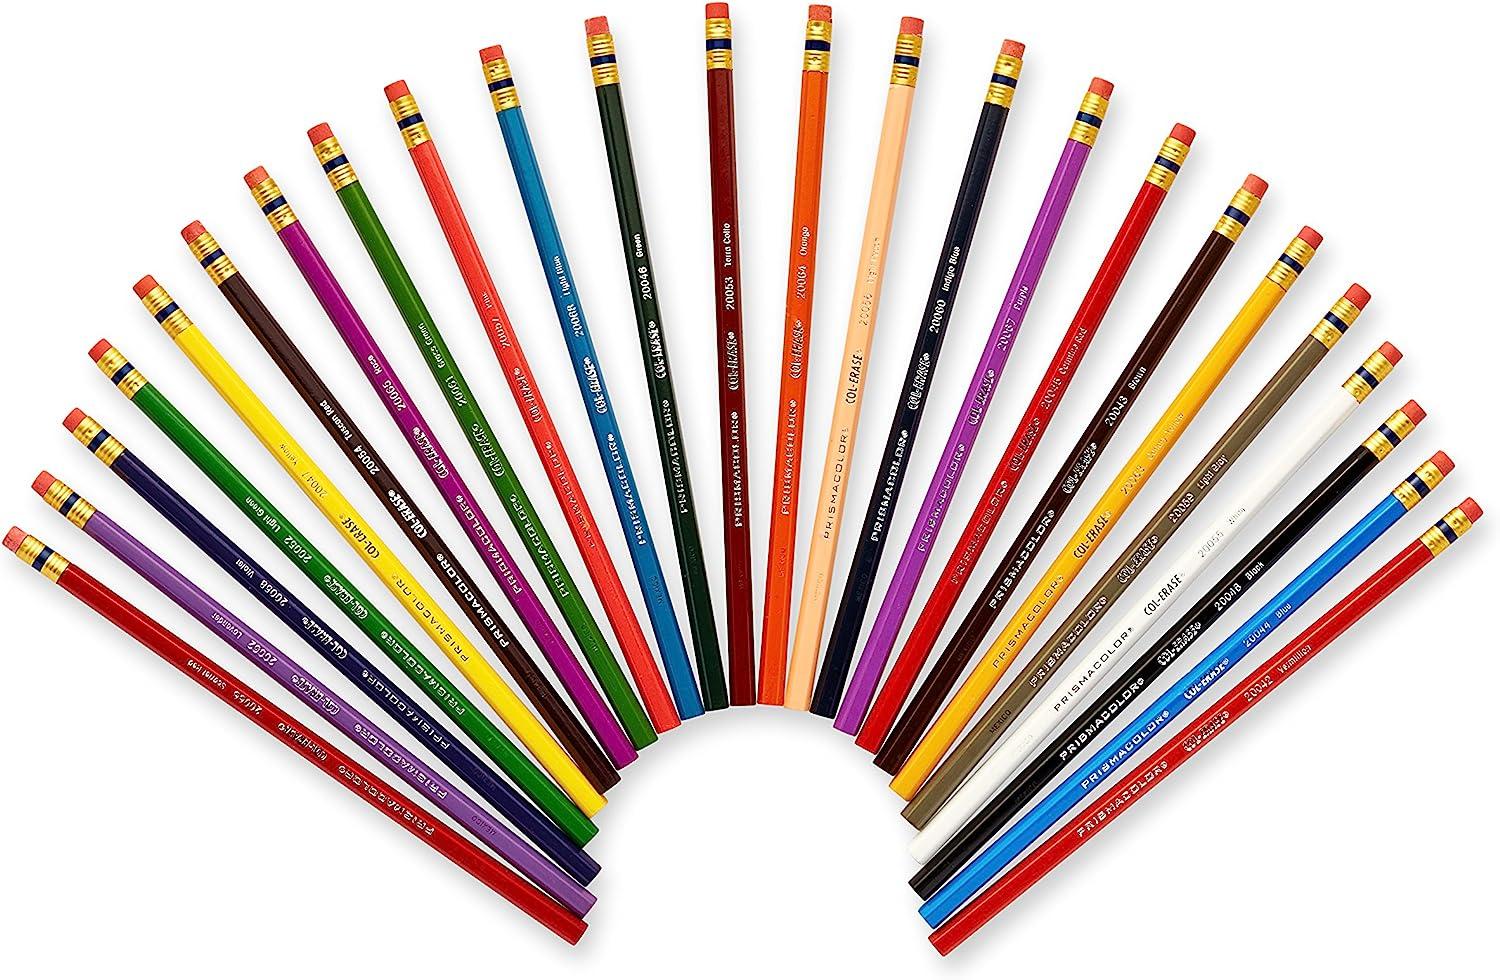 Prismacolor Col-Erase Erasable Colored Pencil, 24-Count, Assorted